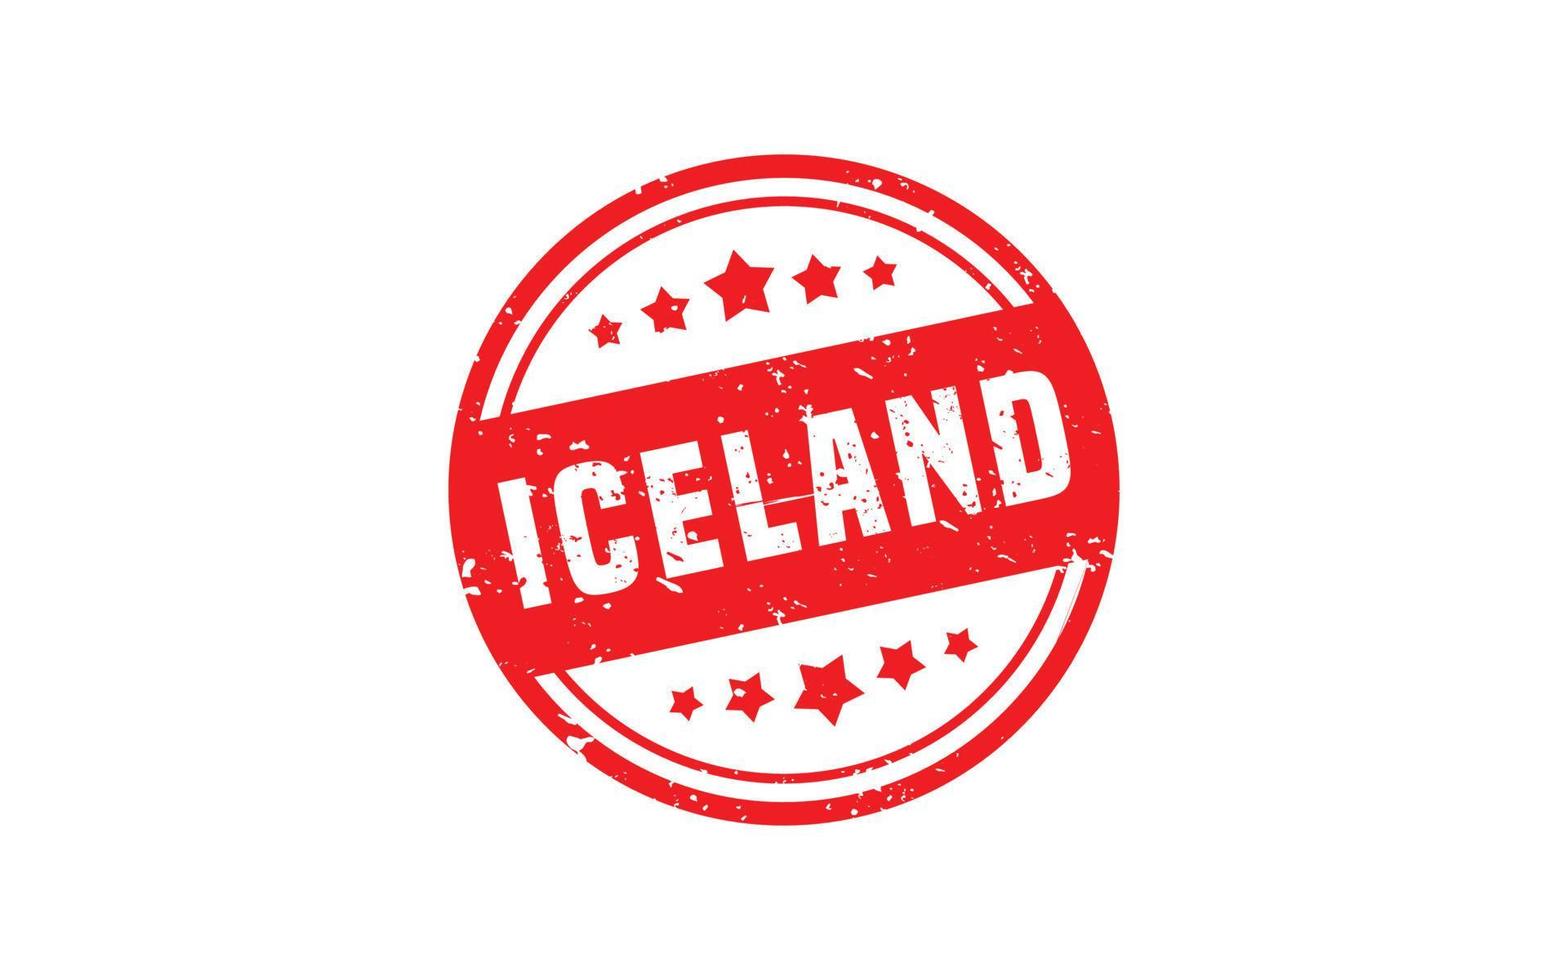 borracha de carimbo da Islândia com estilo grunge em fundo branco vetor